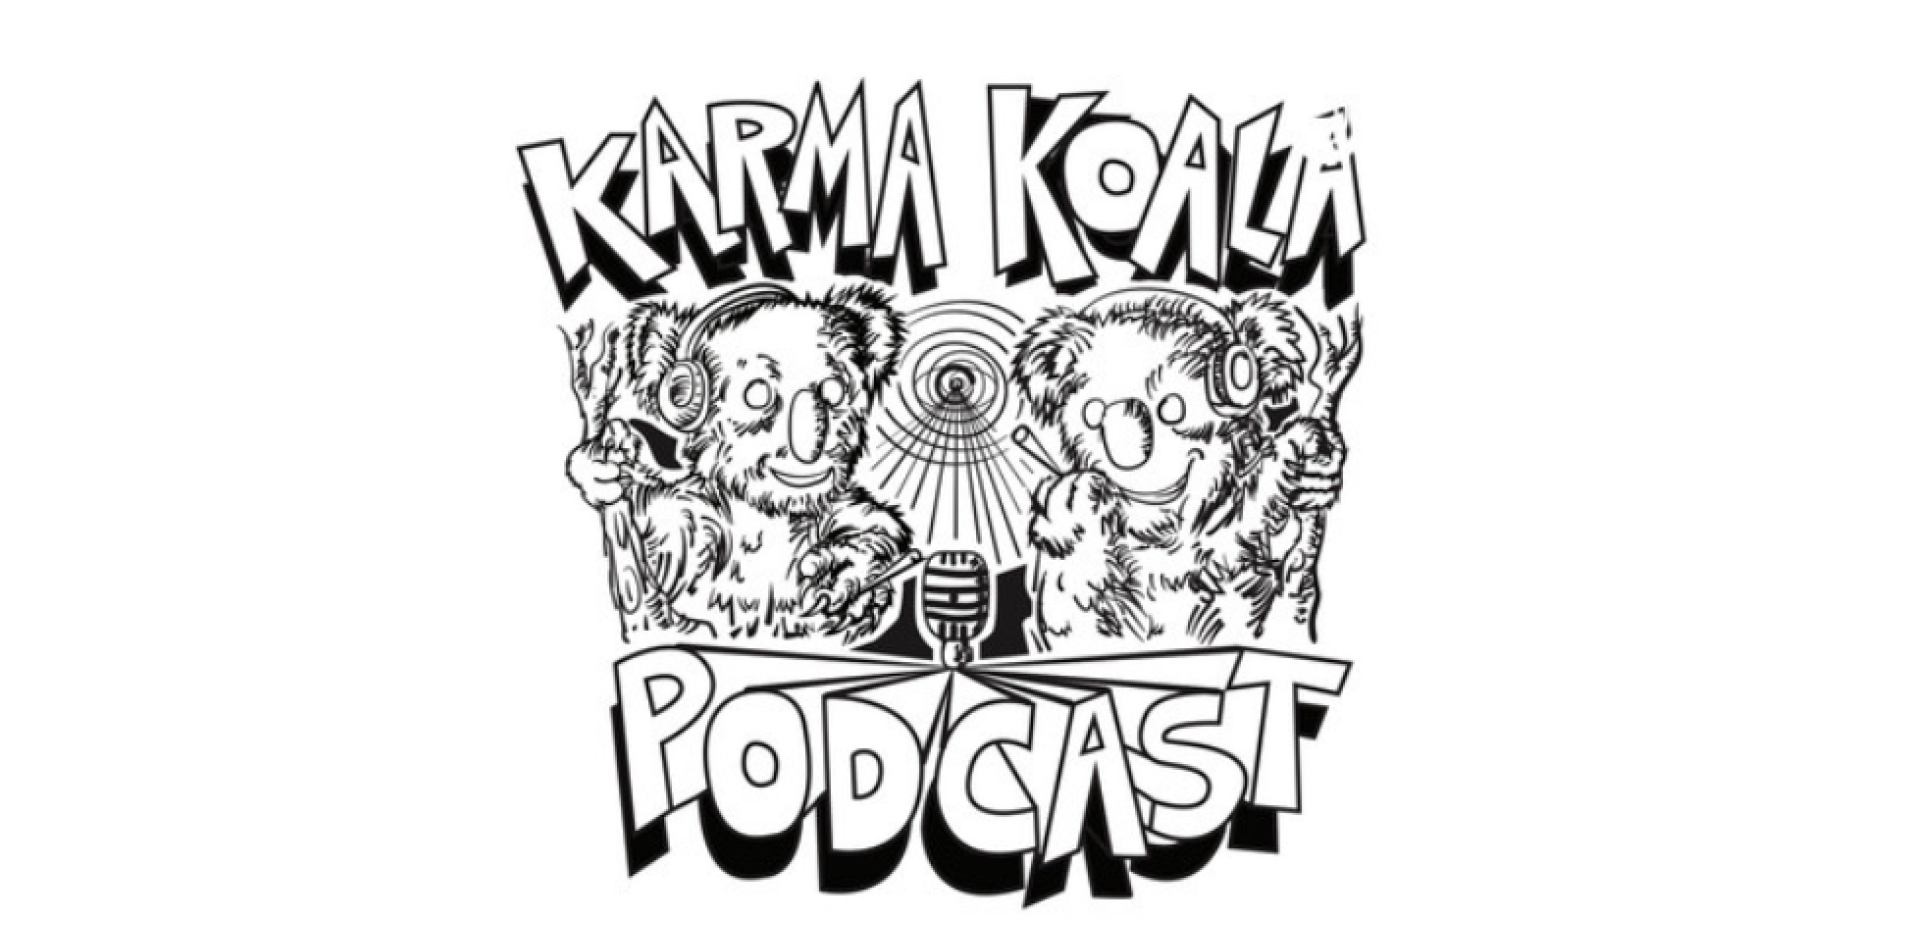 Karma Koala Podcast Episode 67: This Week Michael Sassano, Inesa Ponomariovaite & Our Regular Segment From Dentons German Cannabis Head, Peter Homberg